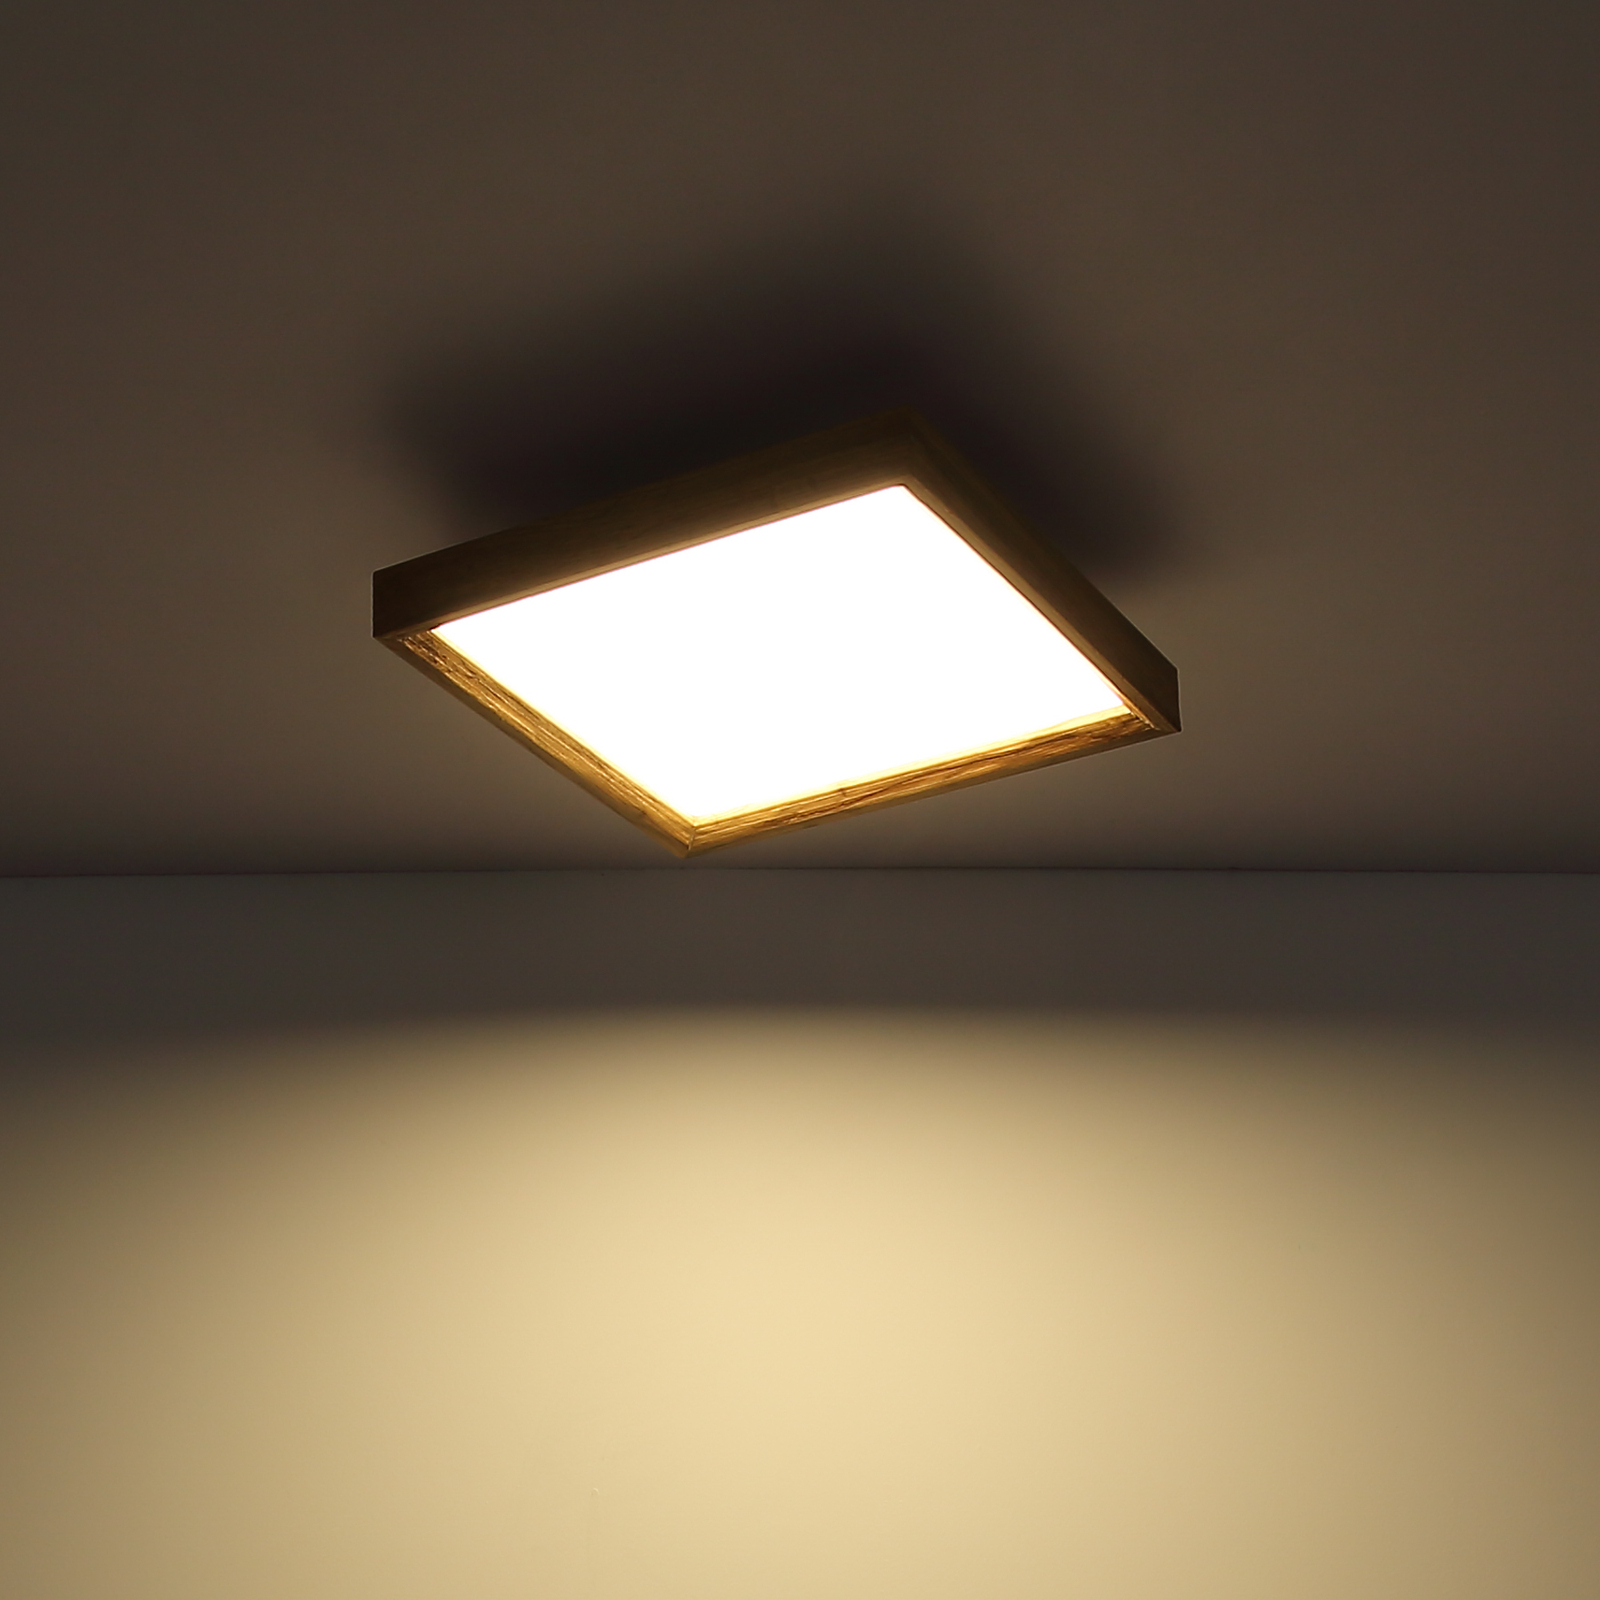 LED ceiling light Cinderella wood CCT 45 x 45 cm